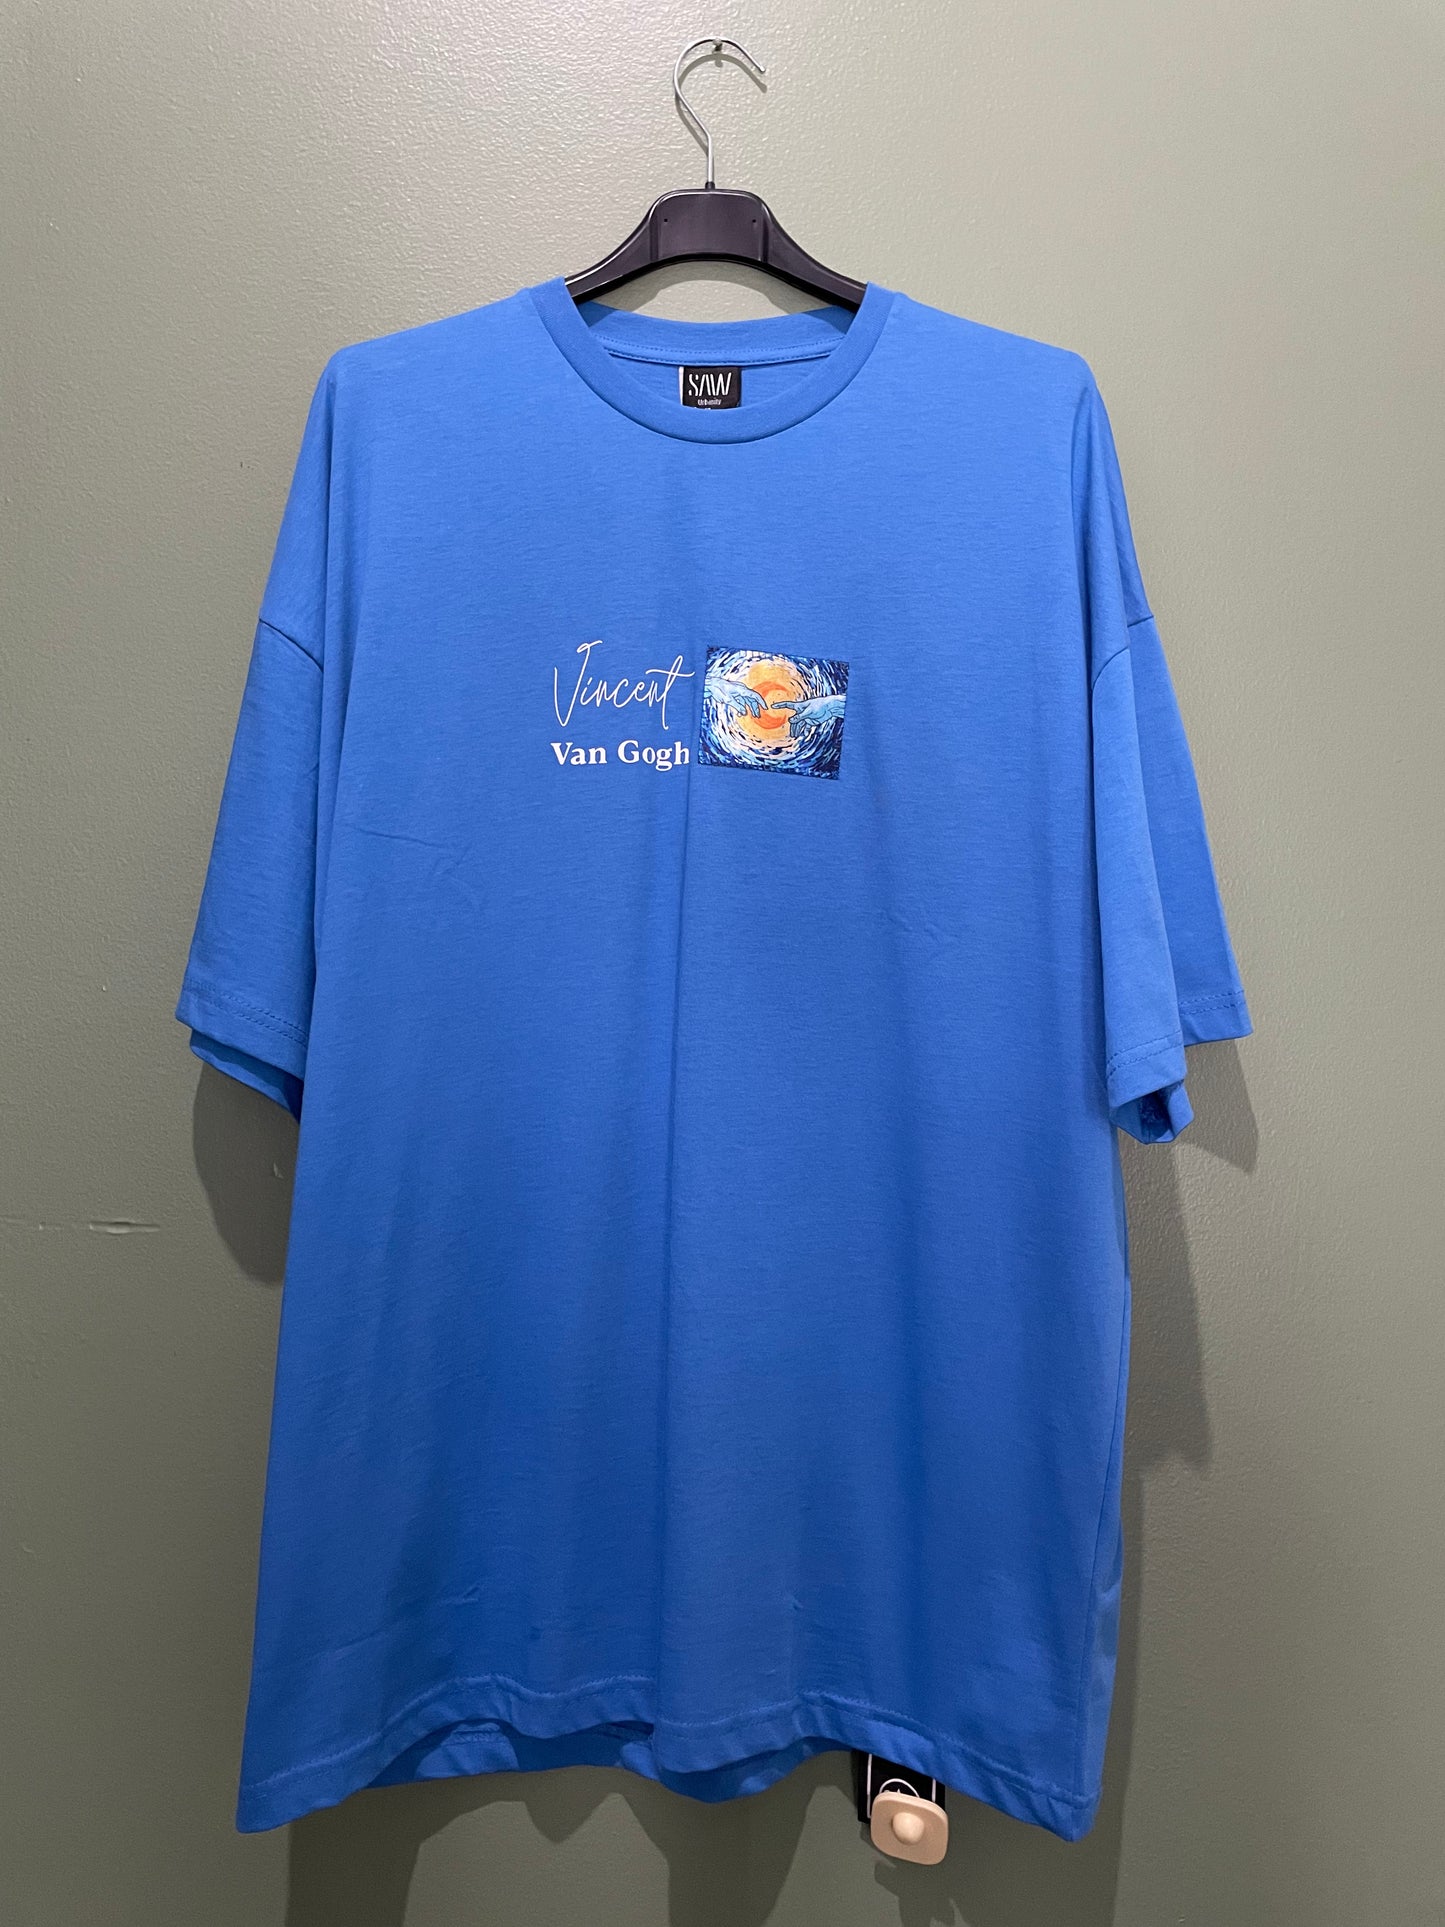 SAW- 4365 T-Shirt